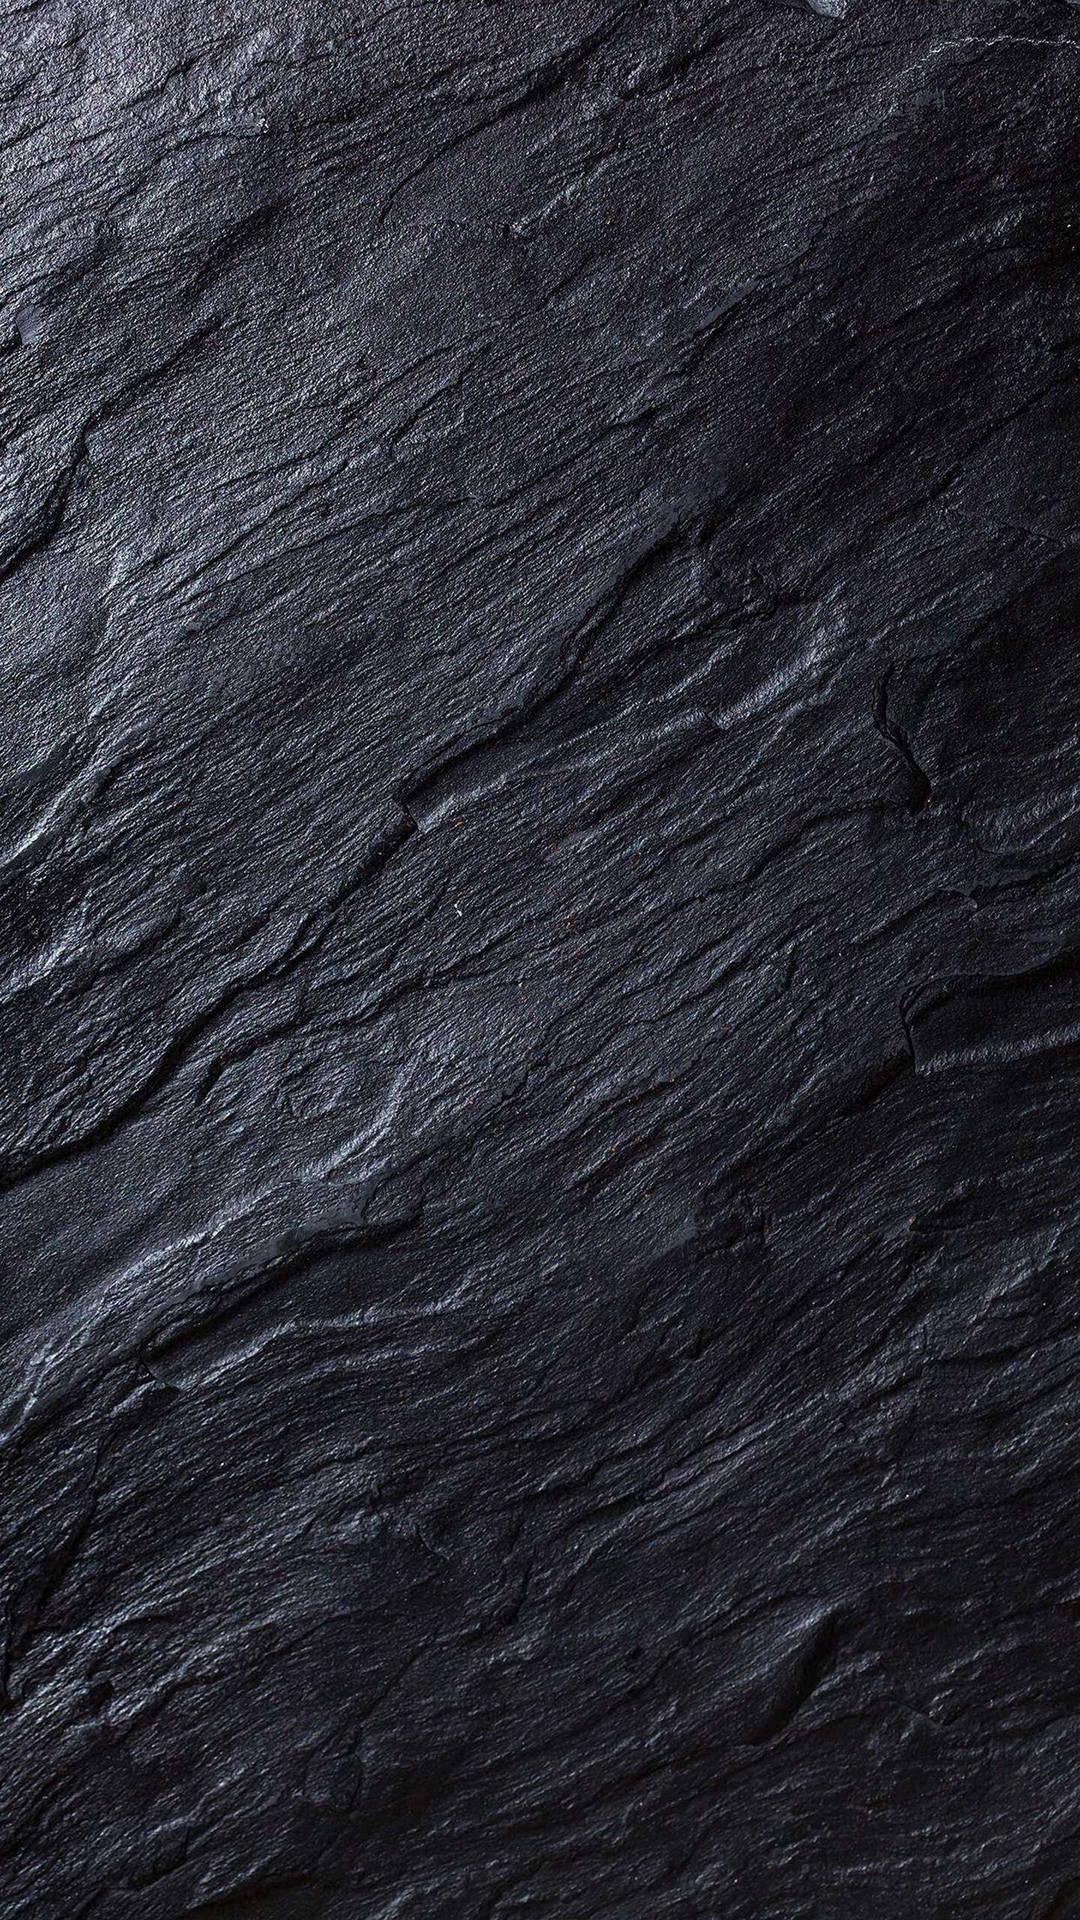 Black Iphone Rock Texture Picture